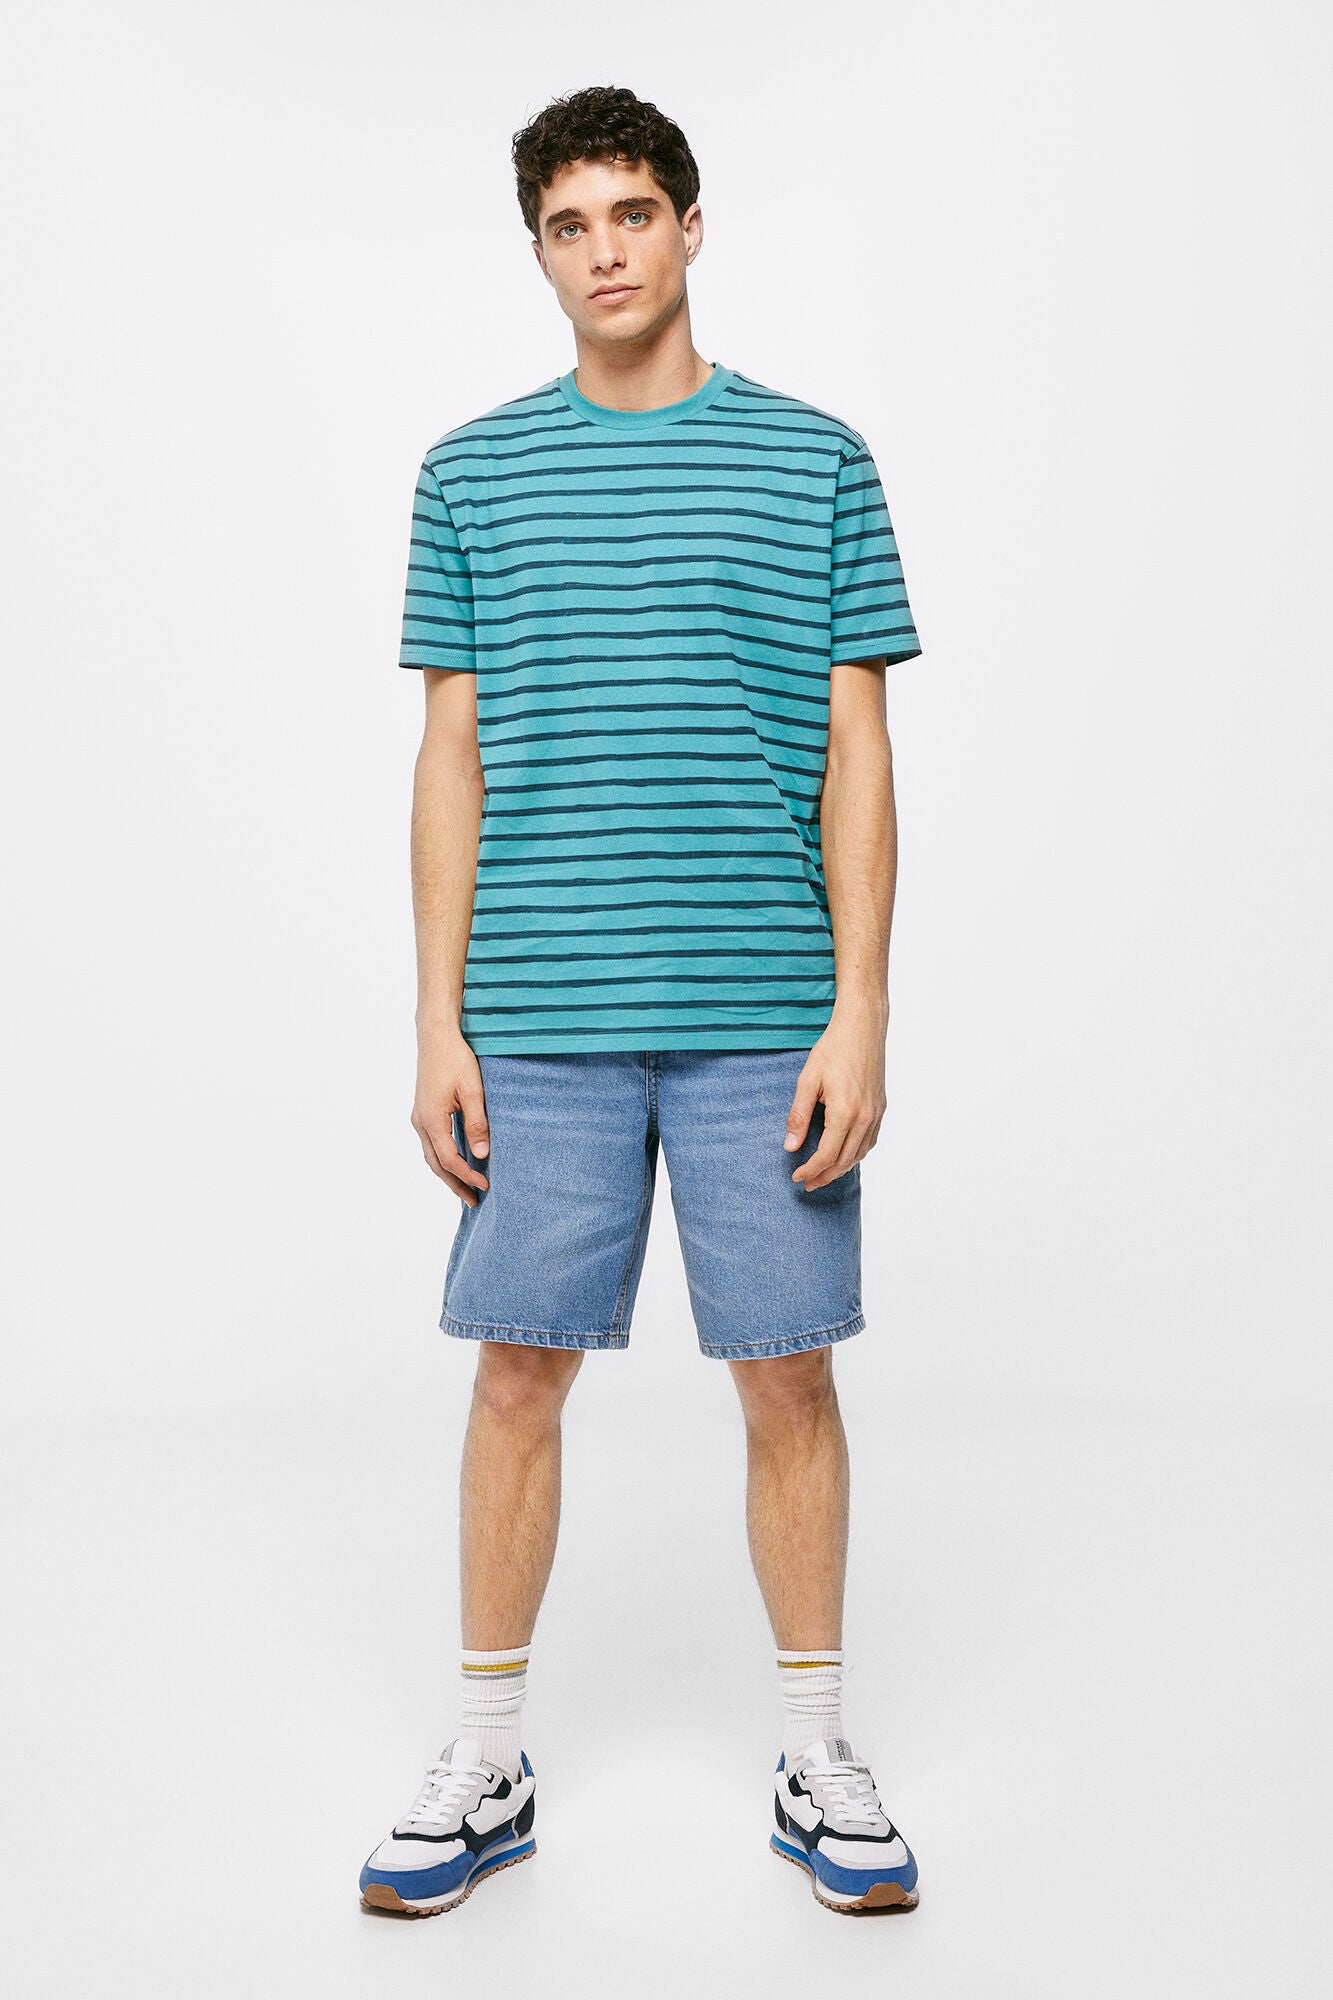 Watercolour stripes T-shirt (Custom Fit) - Turquoise